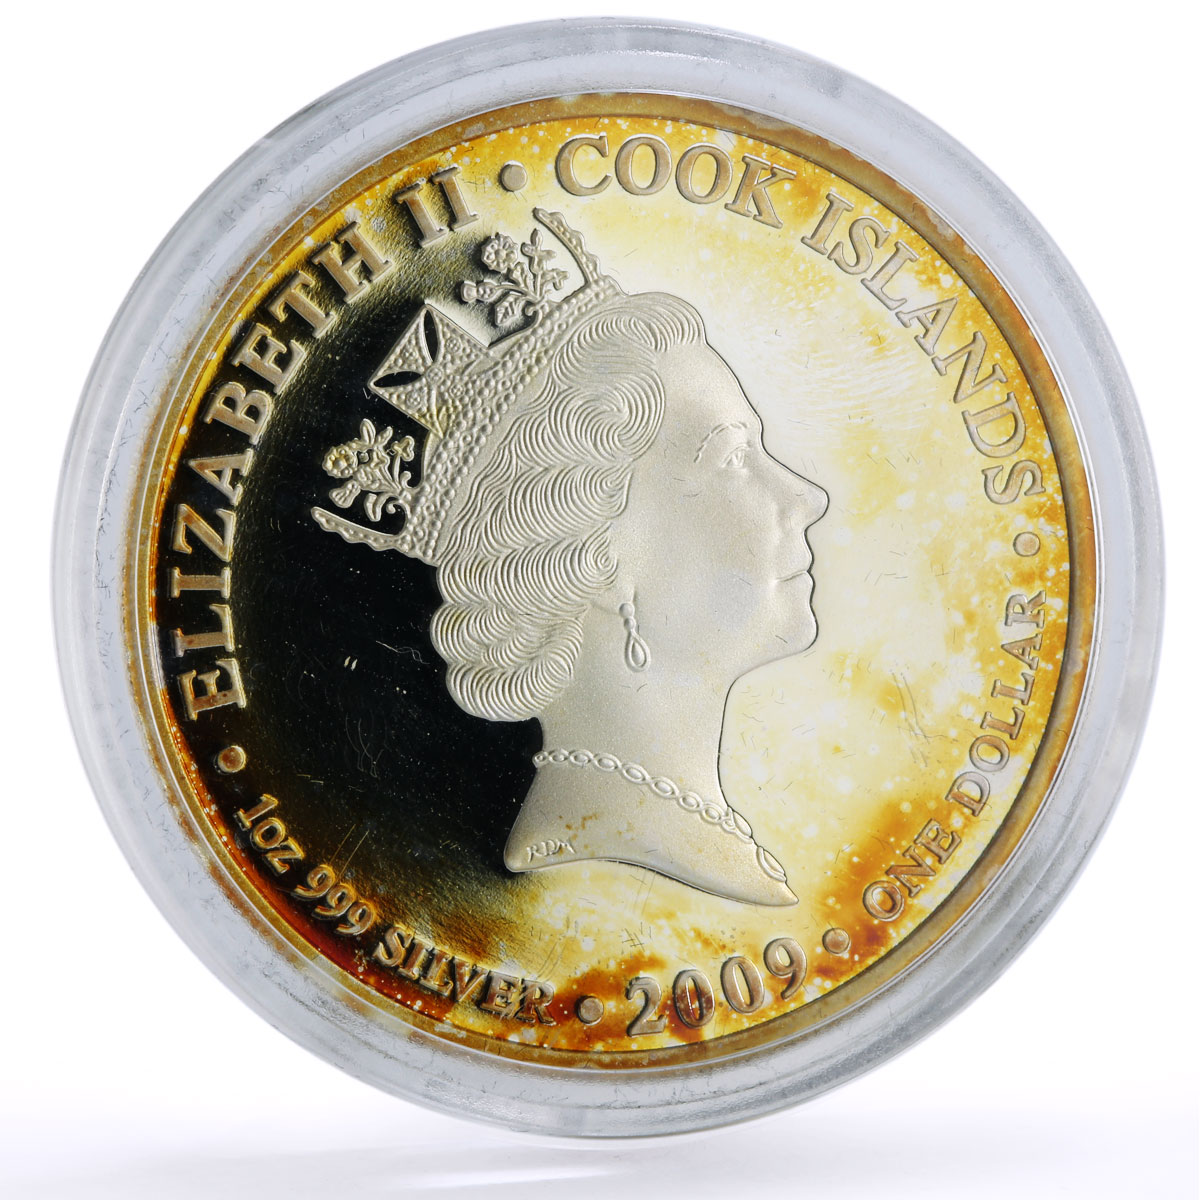 Cook Islands 1 dollar James Cook Reef Striking Ship Clipper silver coin 2009